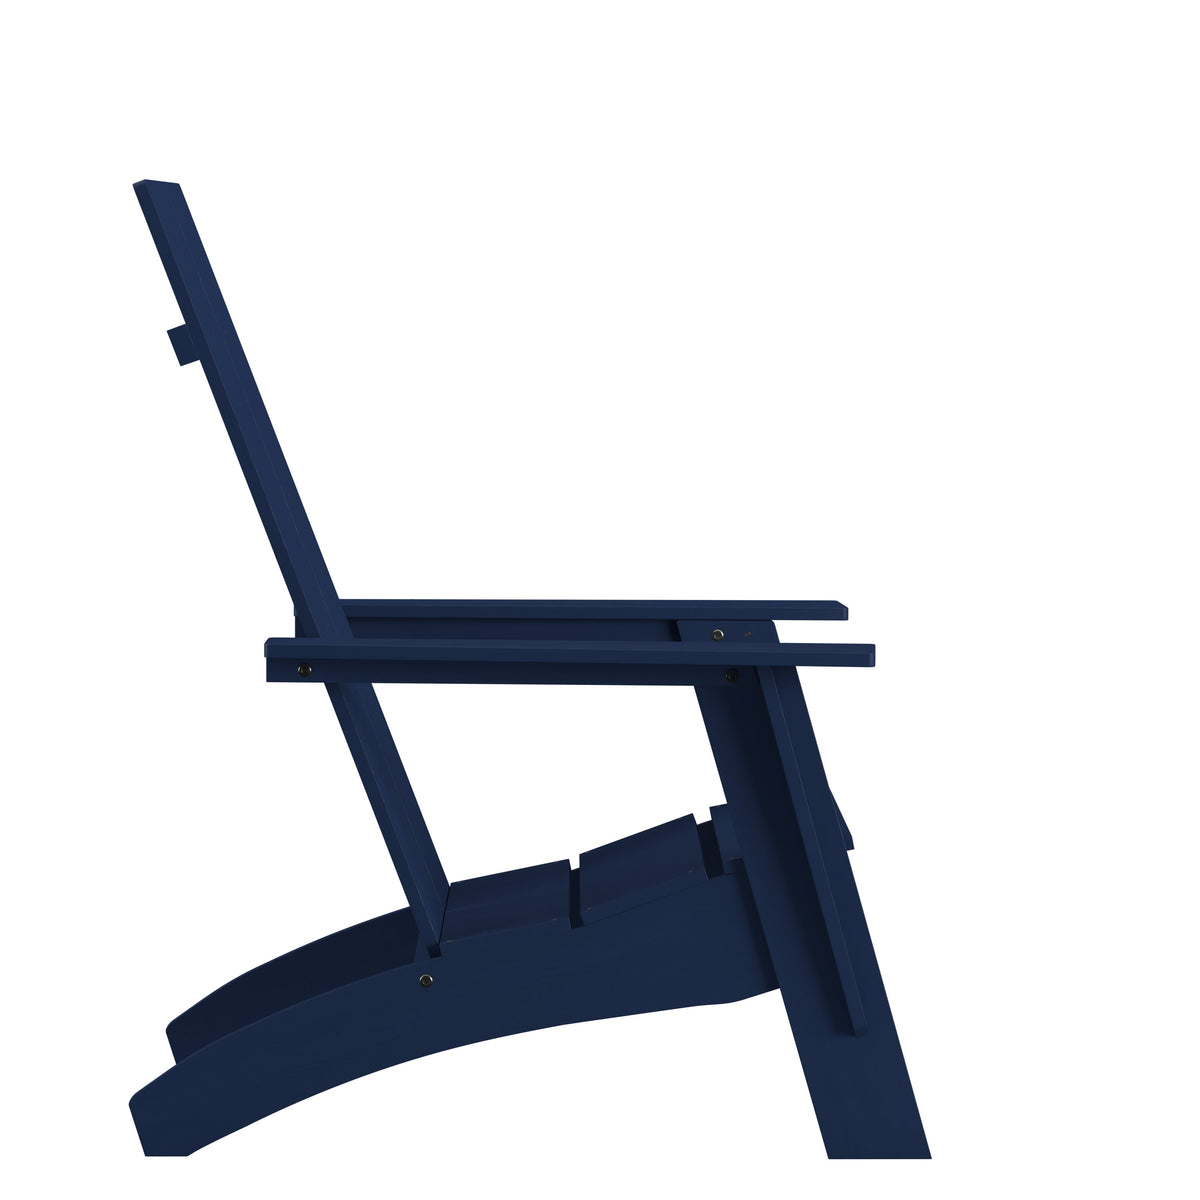 Navy |#| Navy Blue Modern Dual Slat Back Indoor/Outdoor Adirondack Style Patio Chair